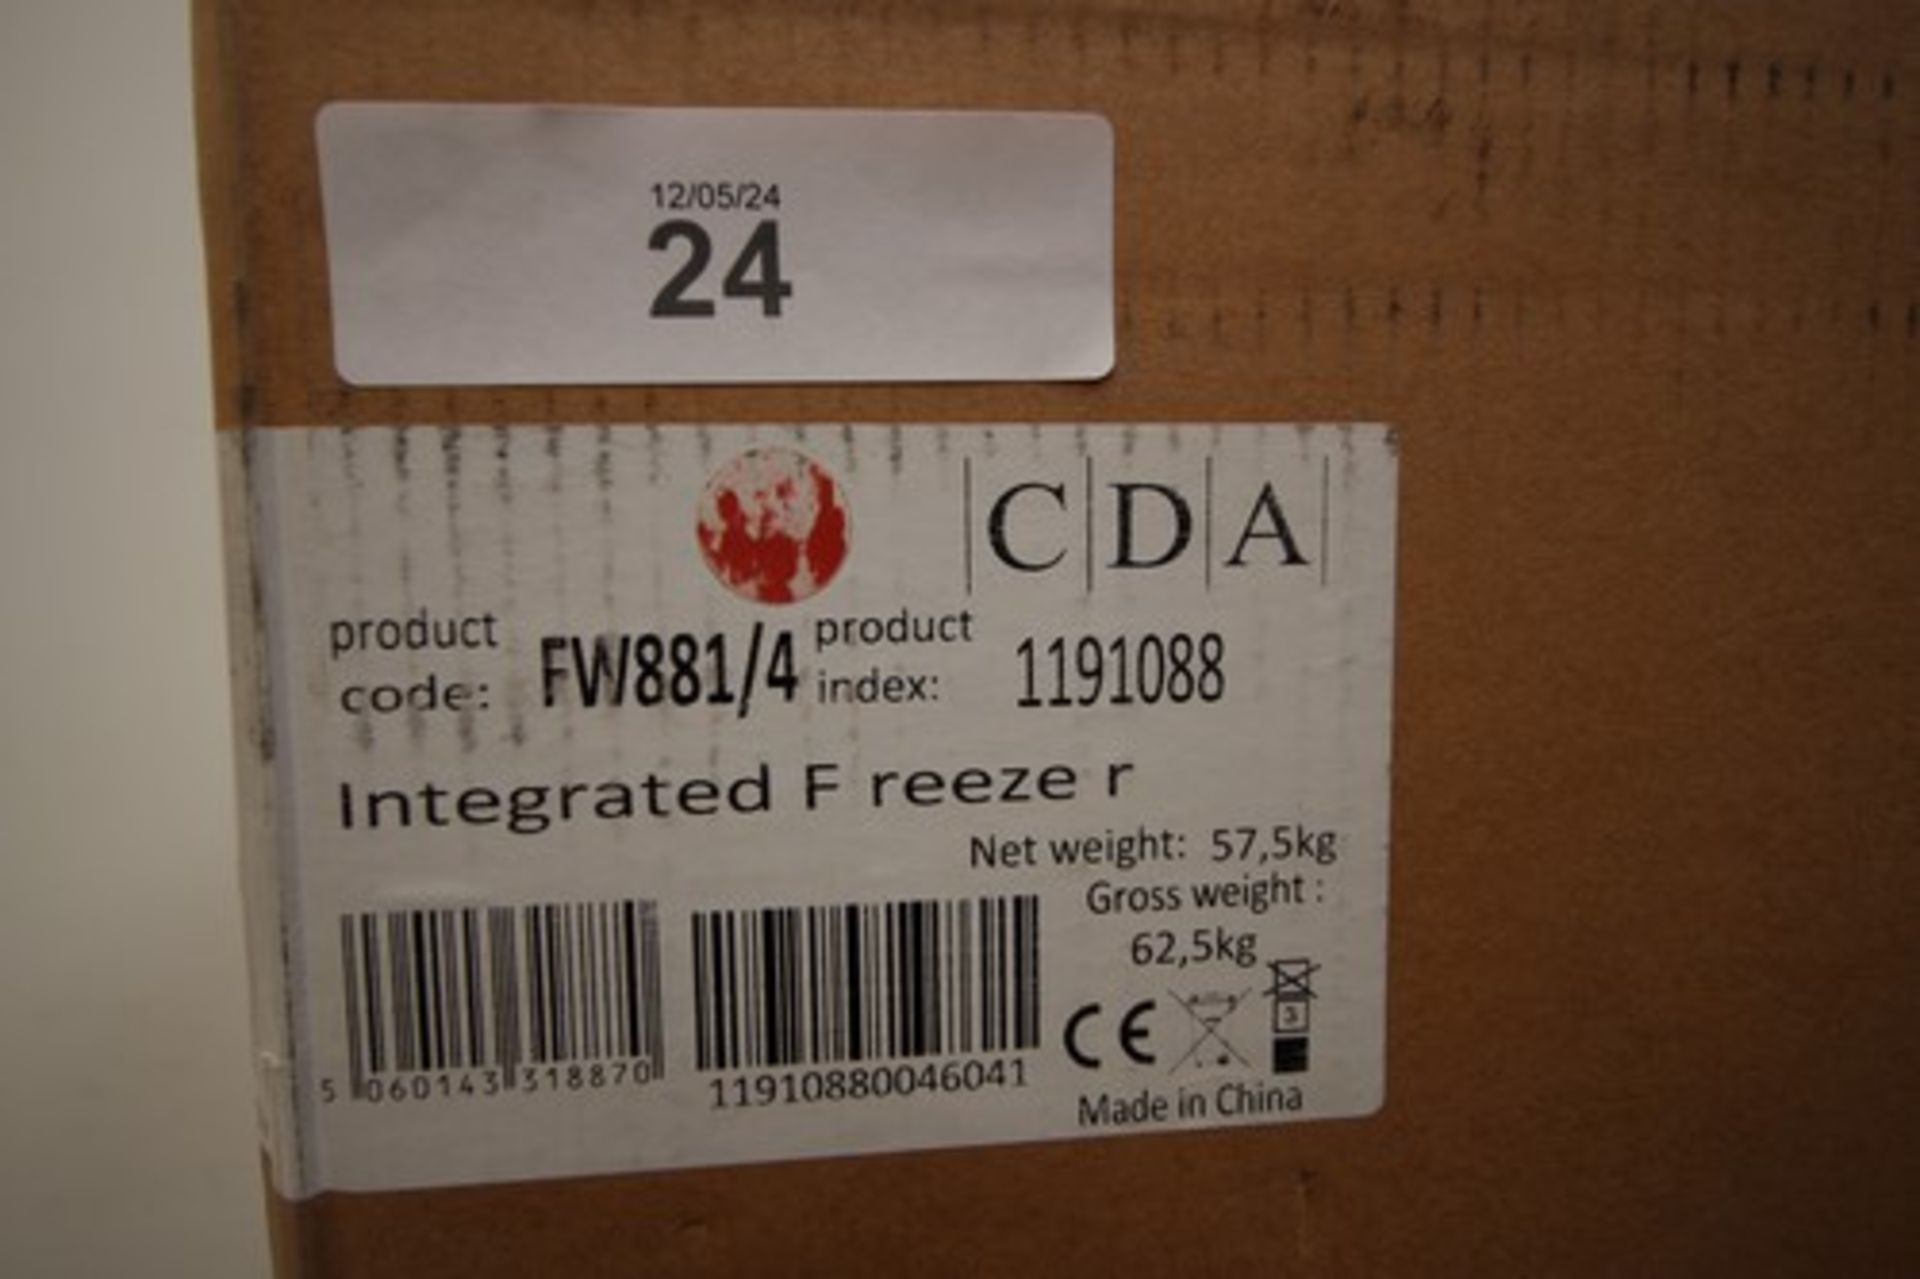 1 x CDA integrated freezer, model No: FW881/4, dented front top panel, dented rear left corner, - Image 6 of 6